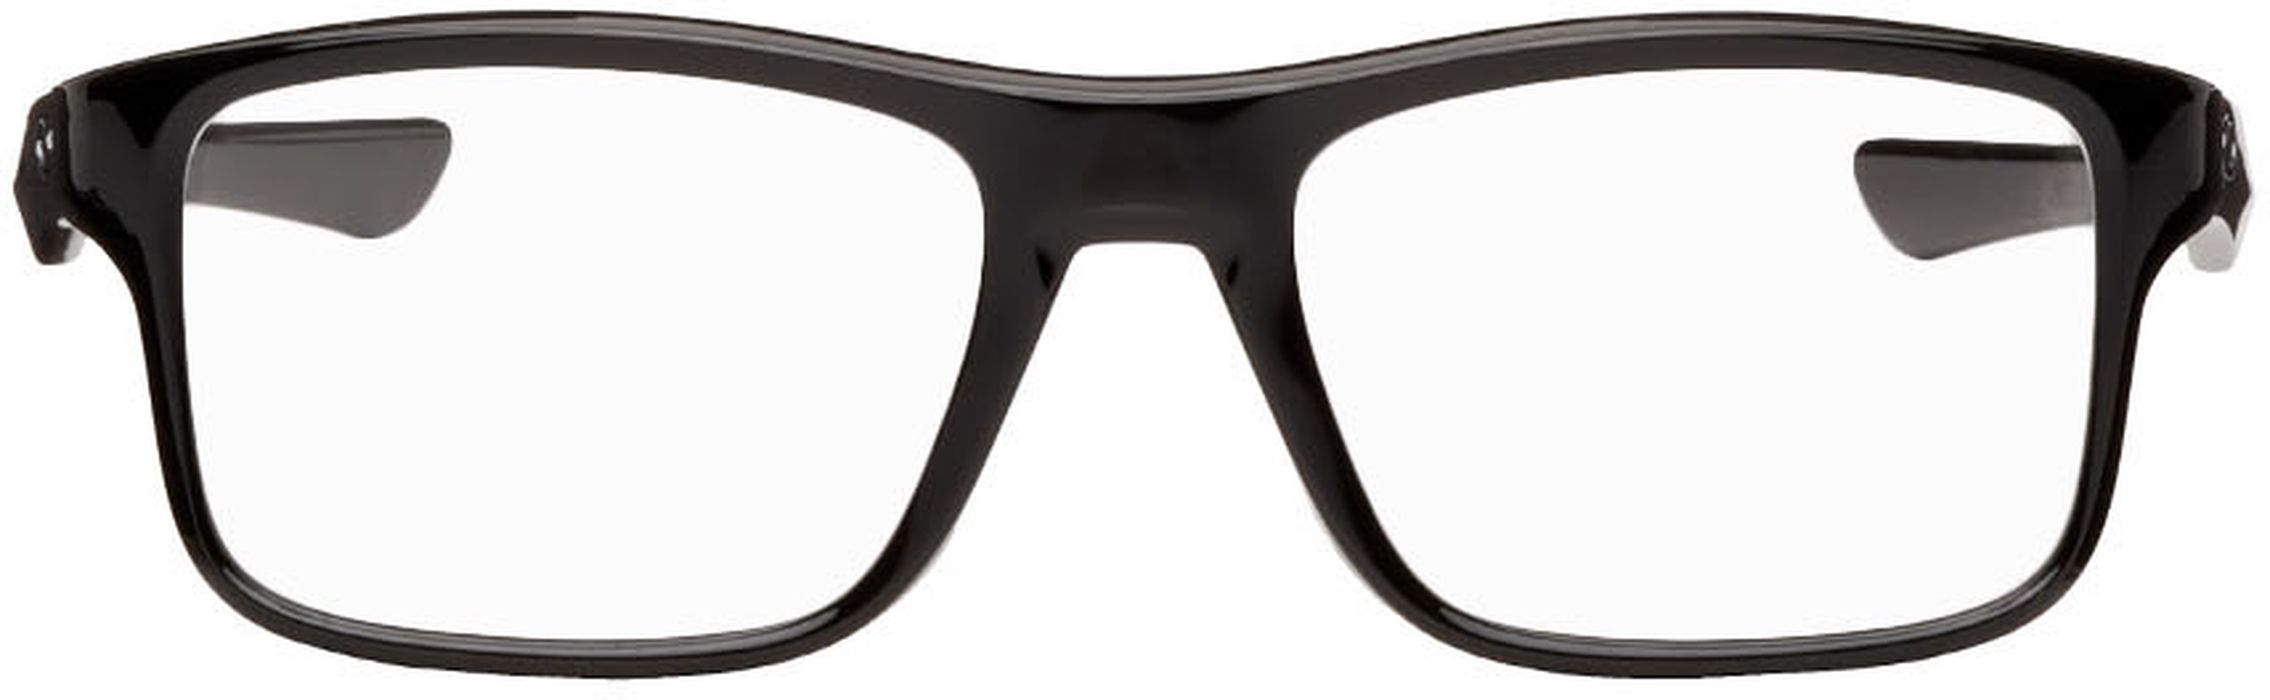 Oakley Black Plank 2.0 Glasses